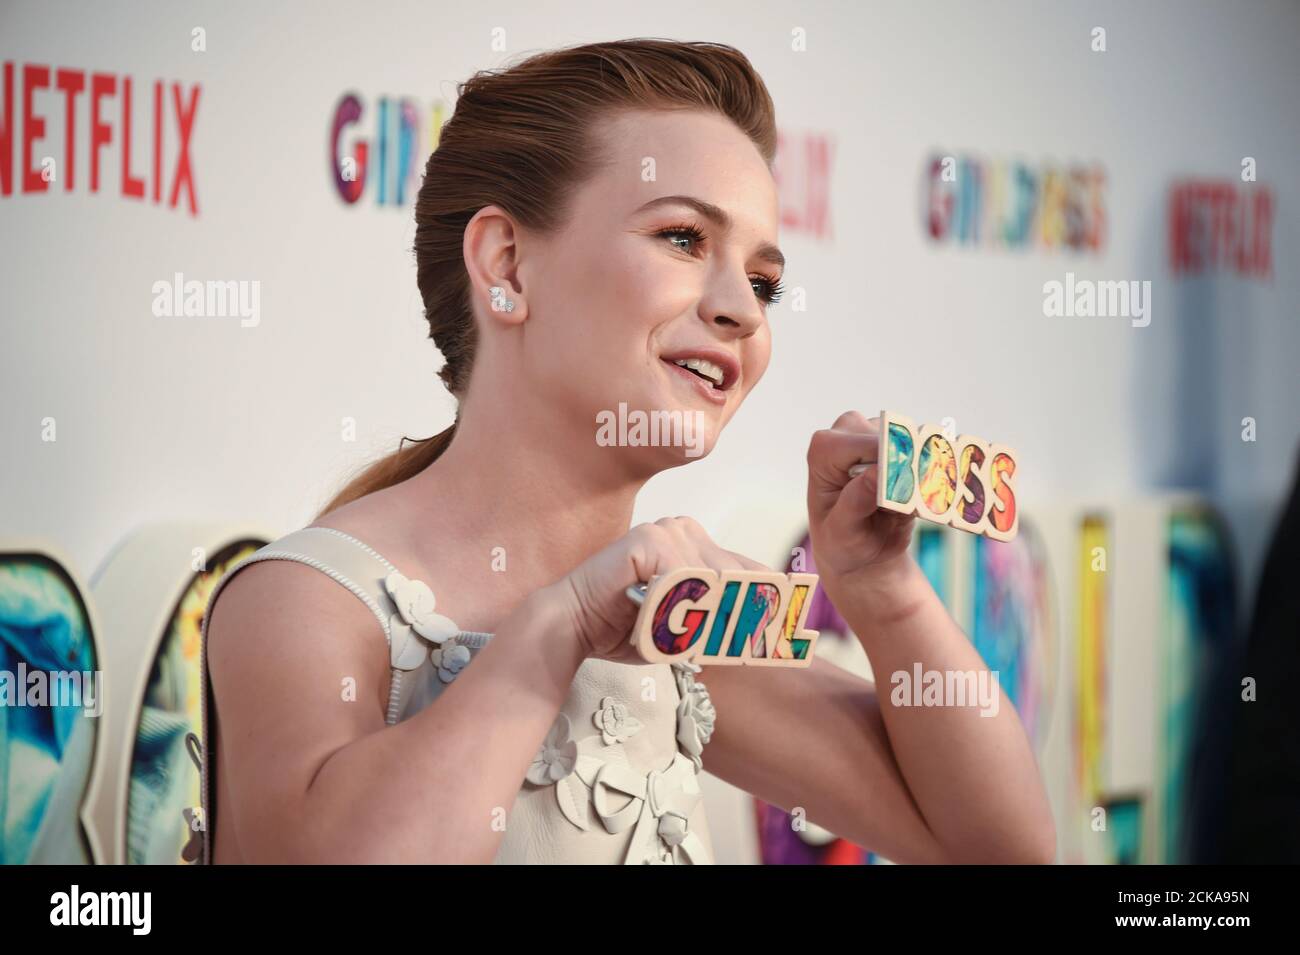 Cast member Britt Robertson attends the premiere of the Netflix series 'Girlboss' in Los Angeles, California, U.S. April 17, 2017. REUTERS/Phil McCarten Stock Photo